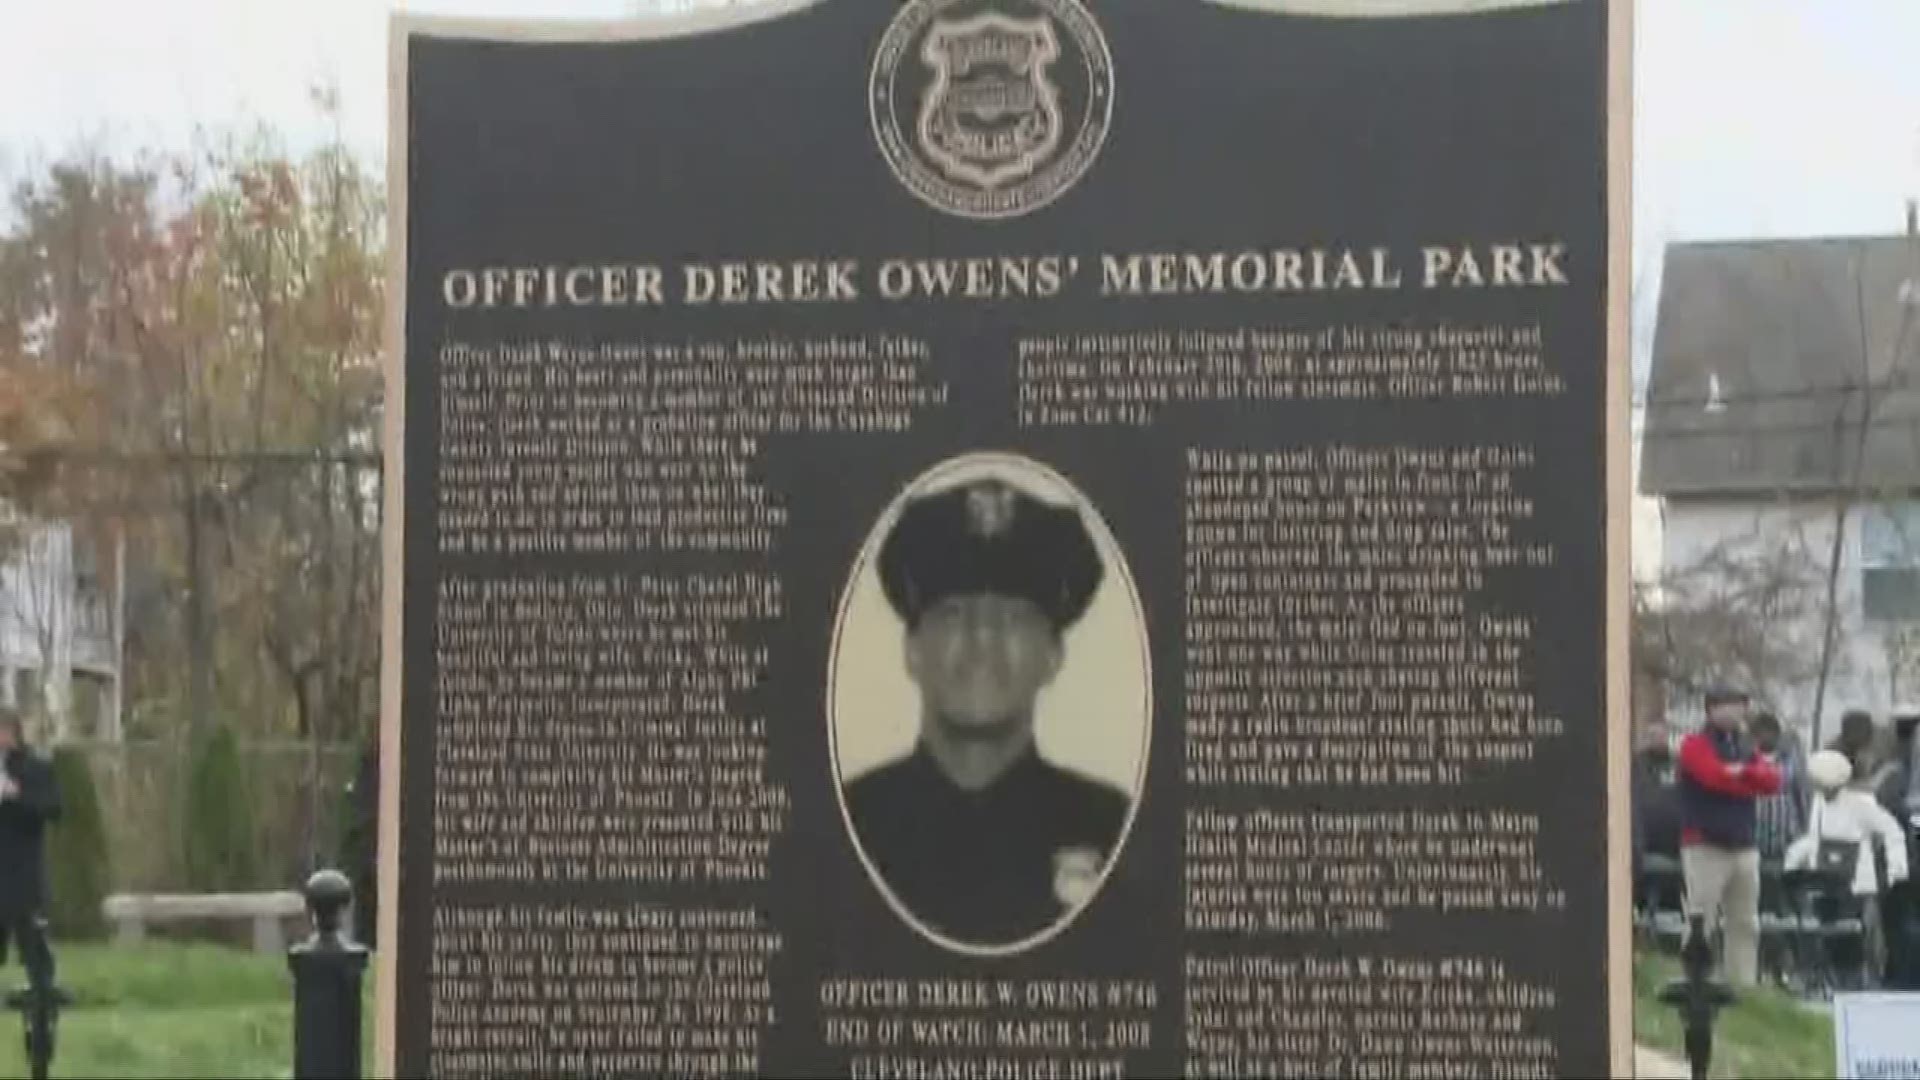 New park dedicated to fallen Cleveland Police officer Derek Owens